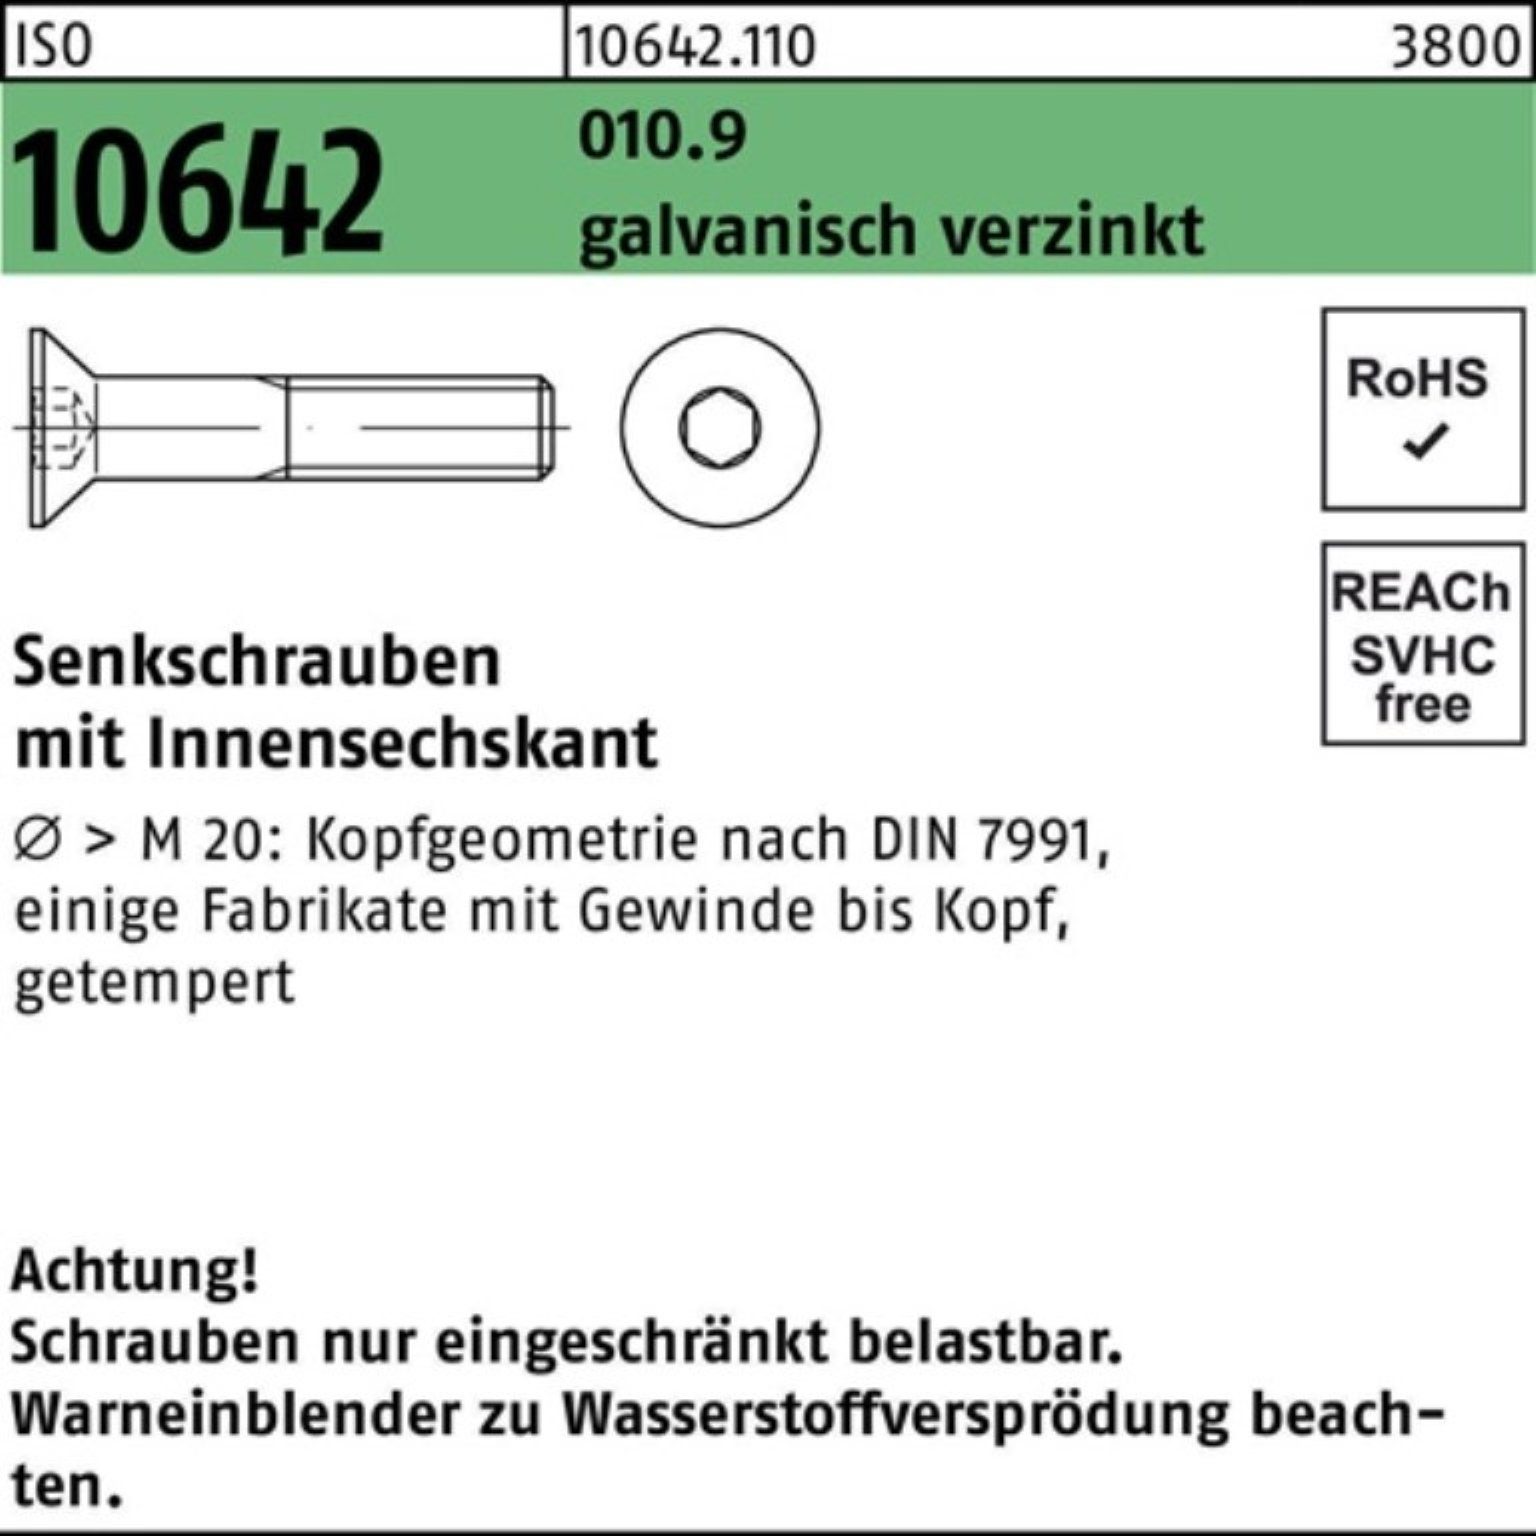 Reyher Senkschraube 200er Innen-6kt ISO Senkschraube 16 Pack 2 M10x 010.9 10642 galv.verz